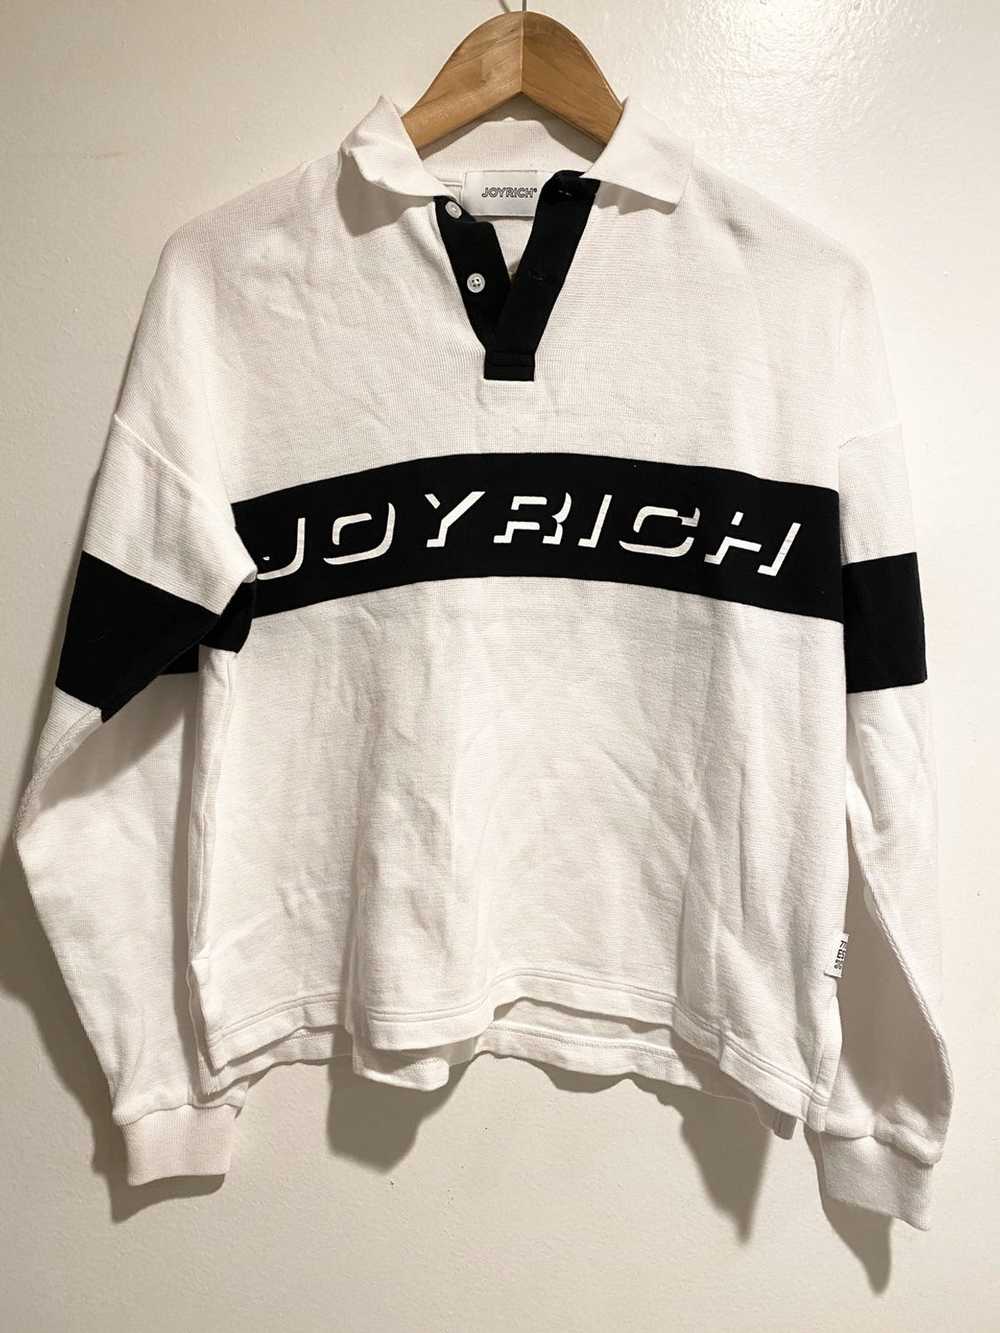 Joyrich Vintage Joyrich Longsleeve Shirt - image 1